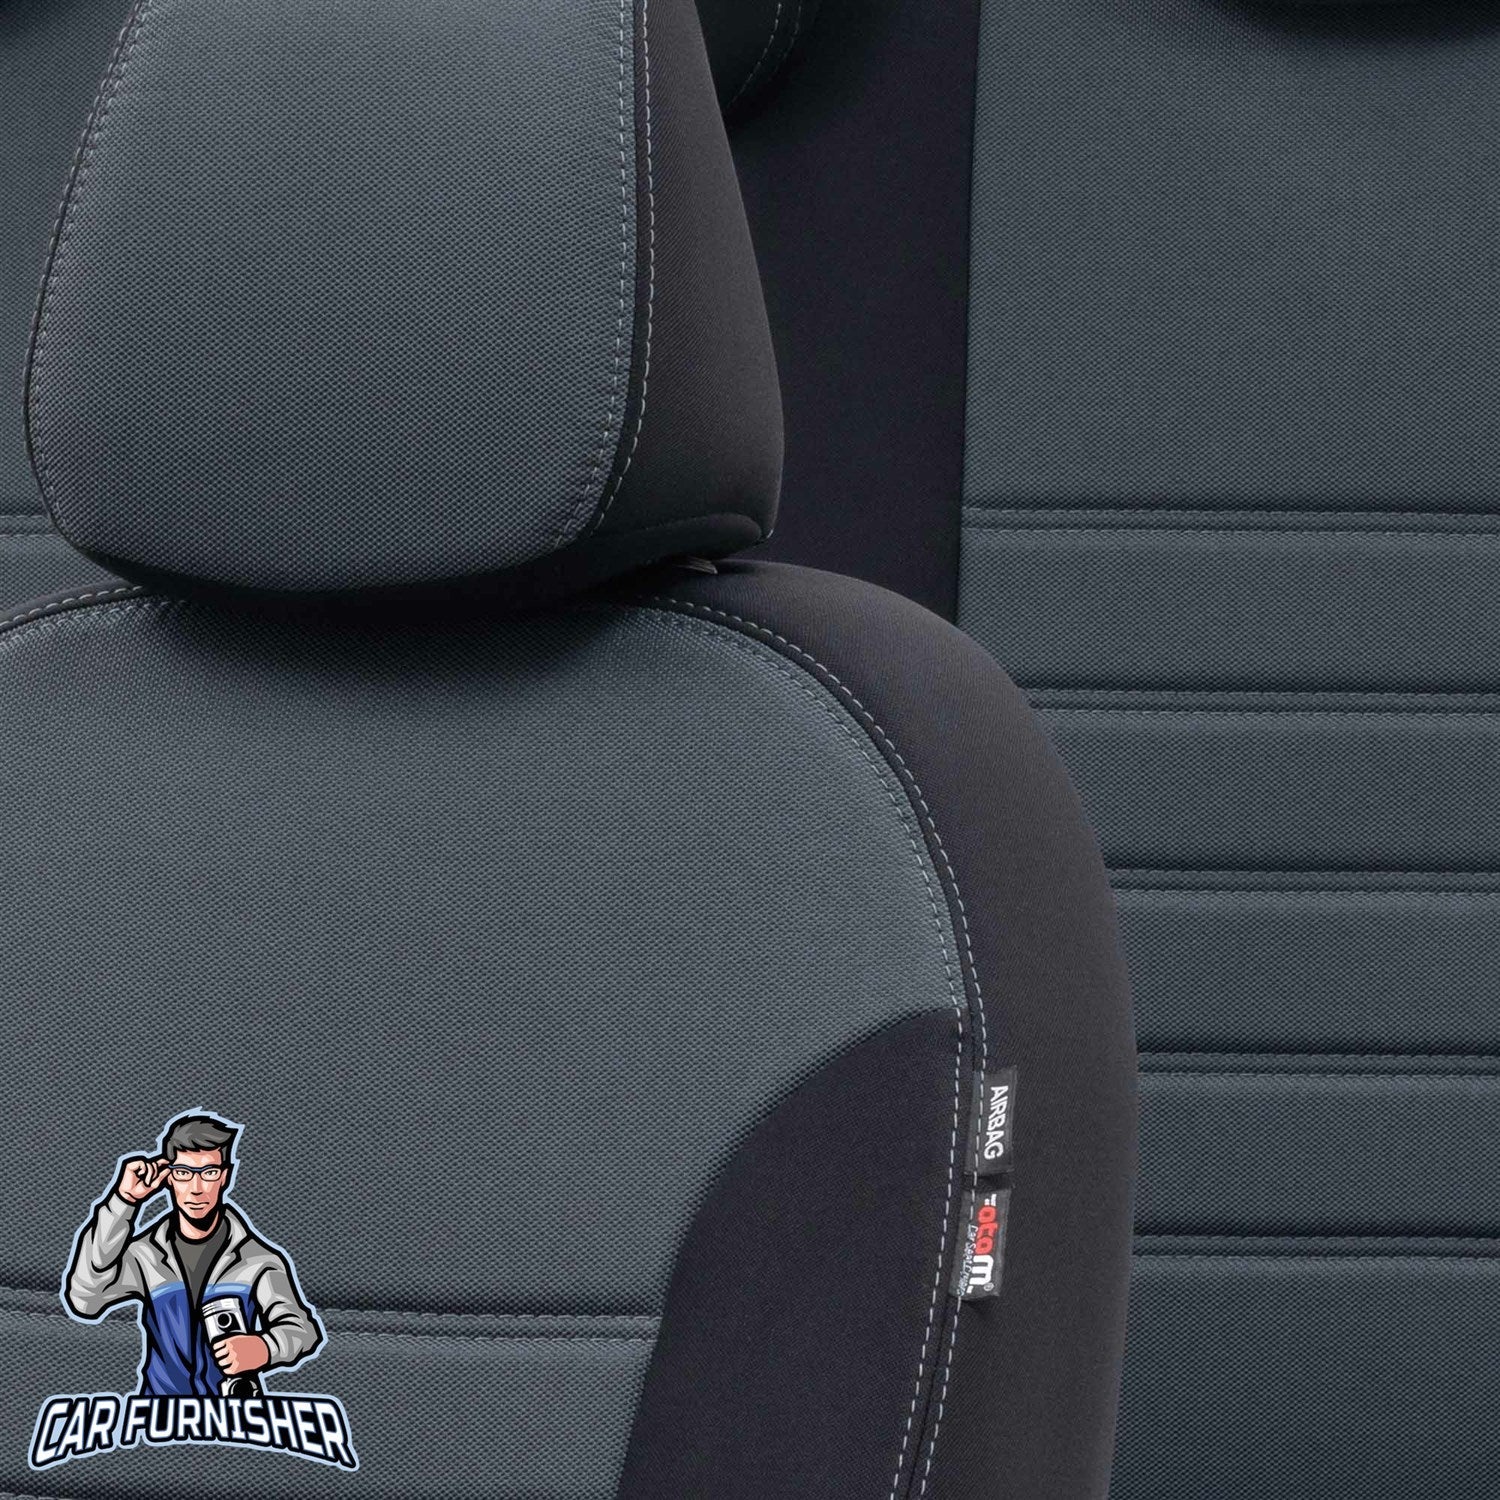 Audi A1 Seat Cover Original Jacquard Design Smoked Black Jacquard Fabric